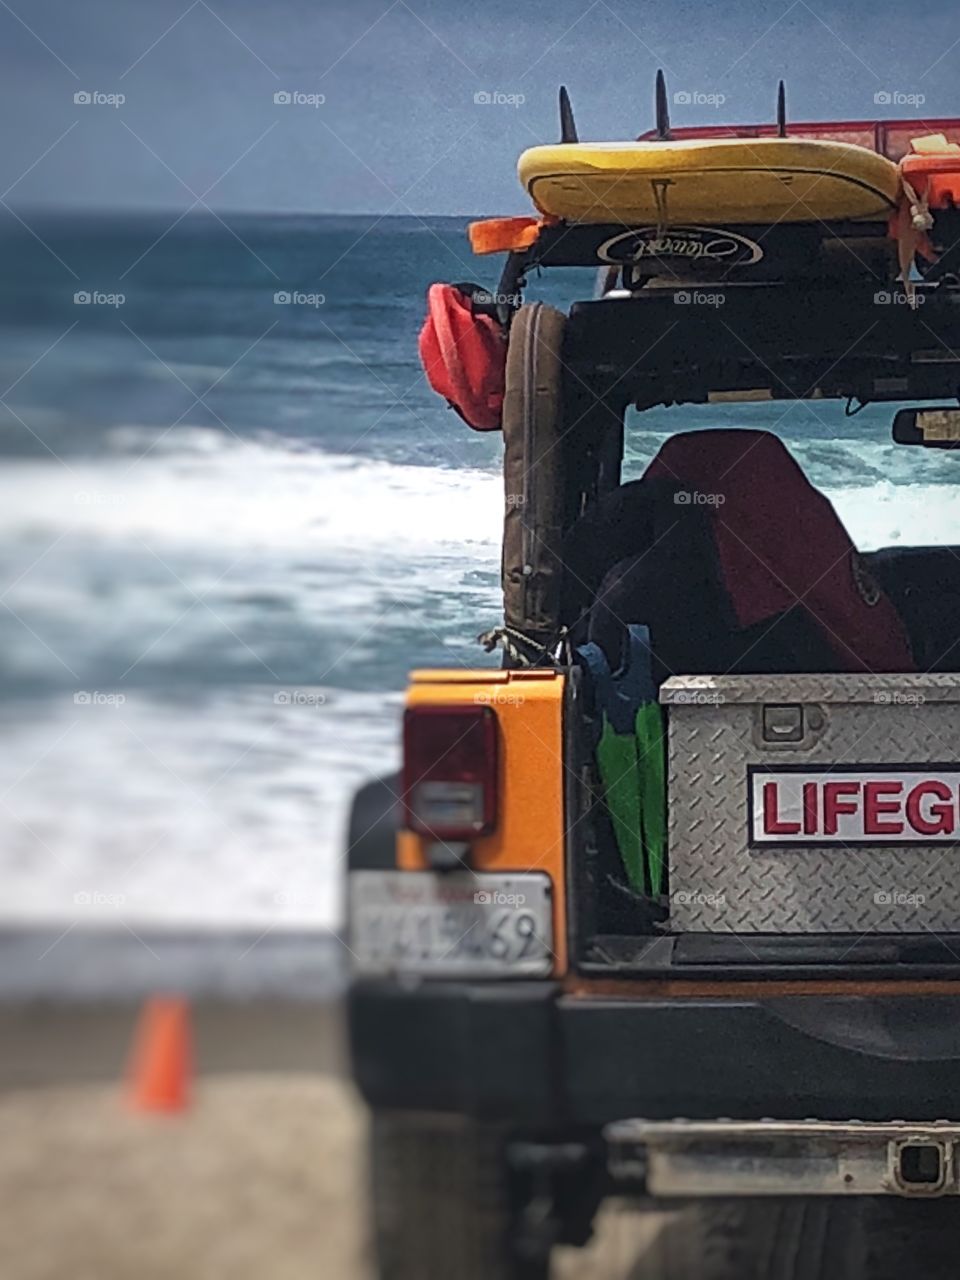 Enjoy the June! St the Beach, Lifeguard Jeep, Foap Mission 